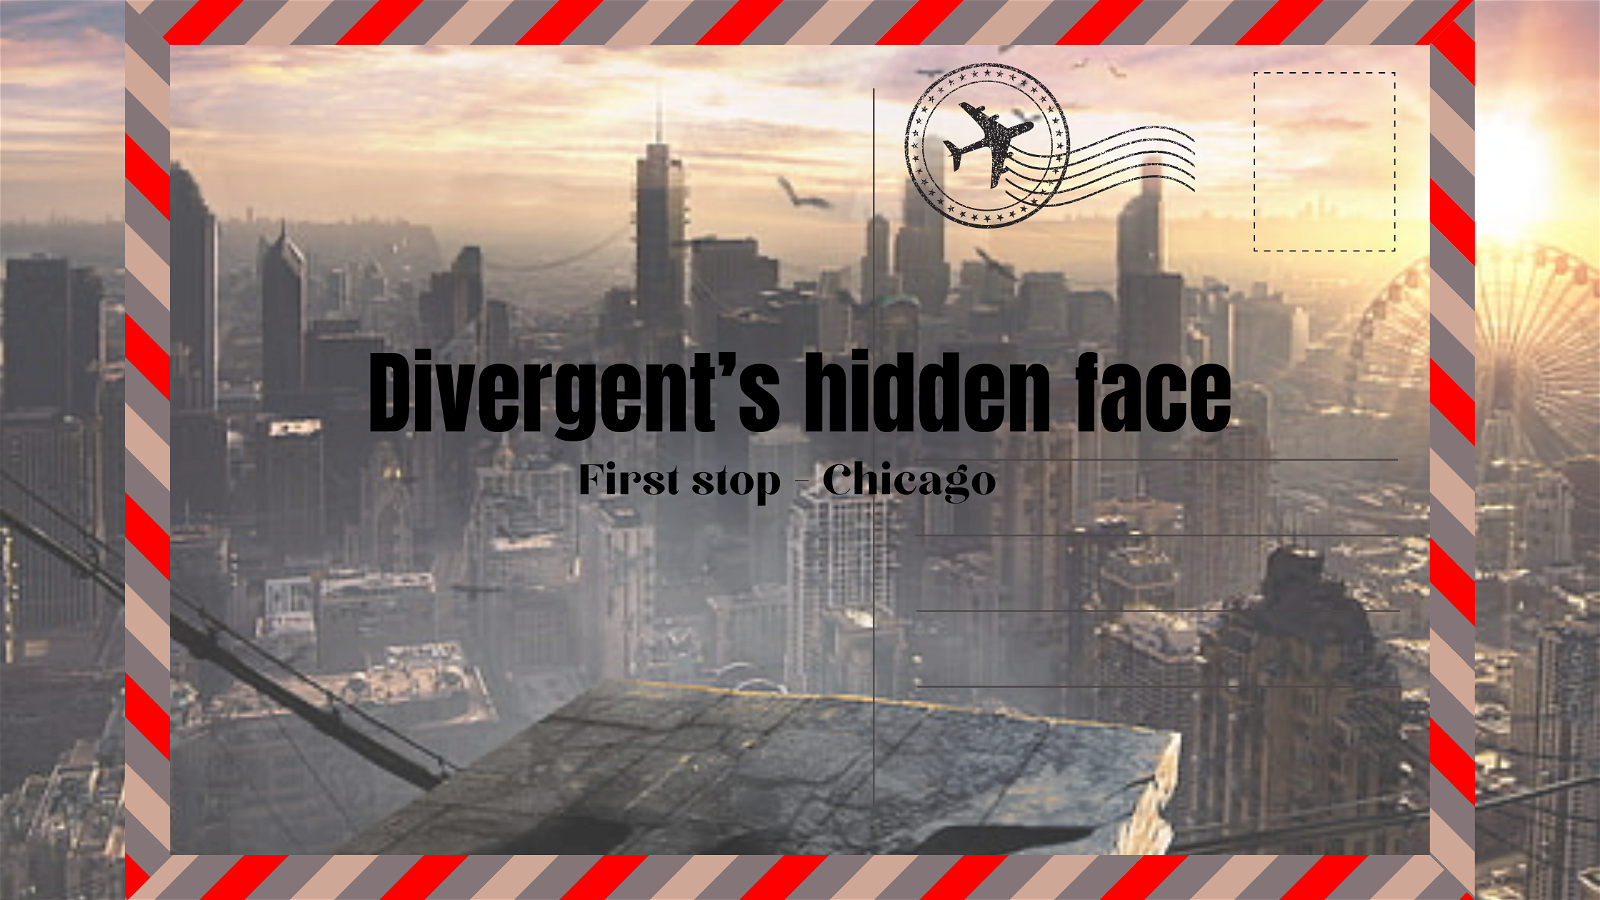 Divergent's hidden face - first stop Chicago